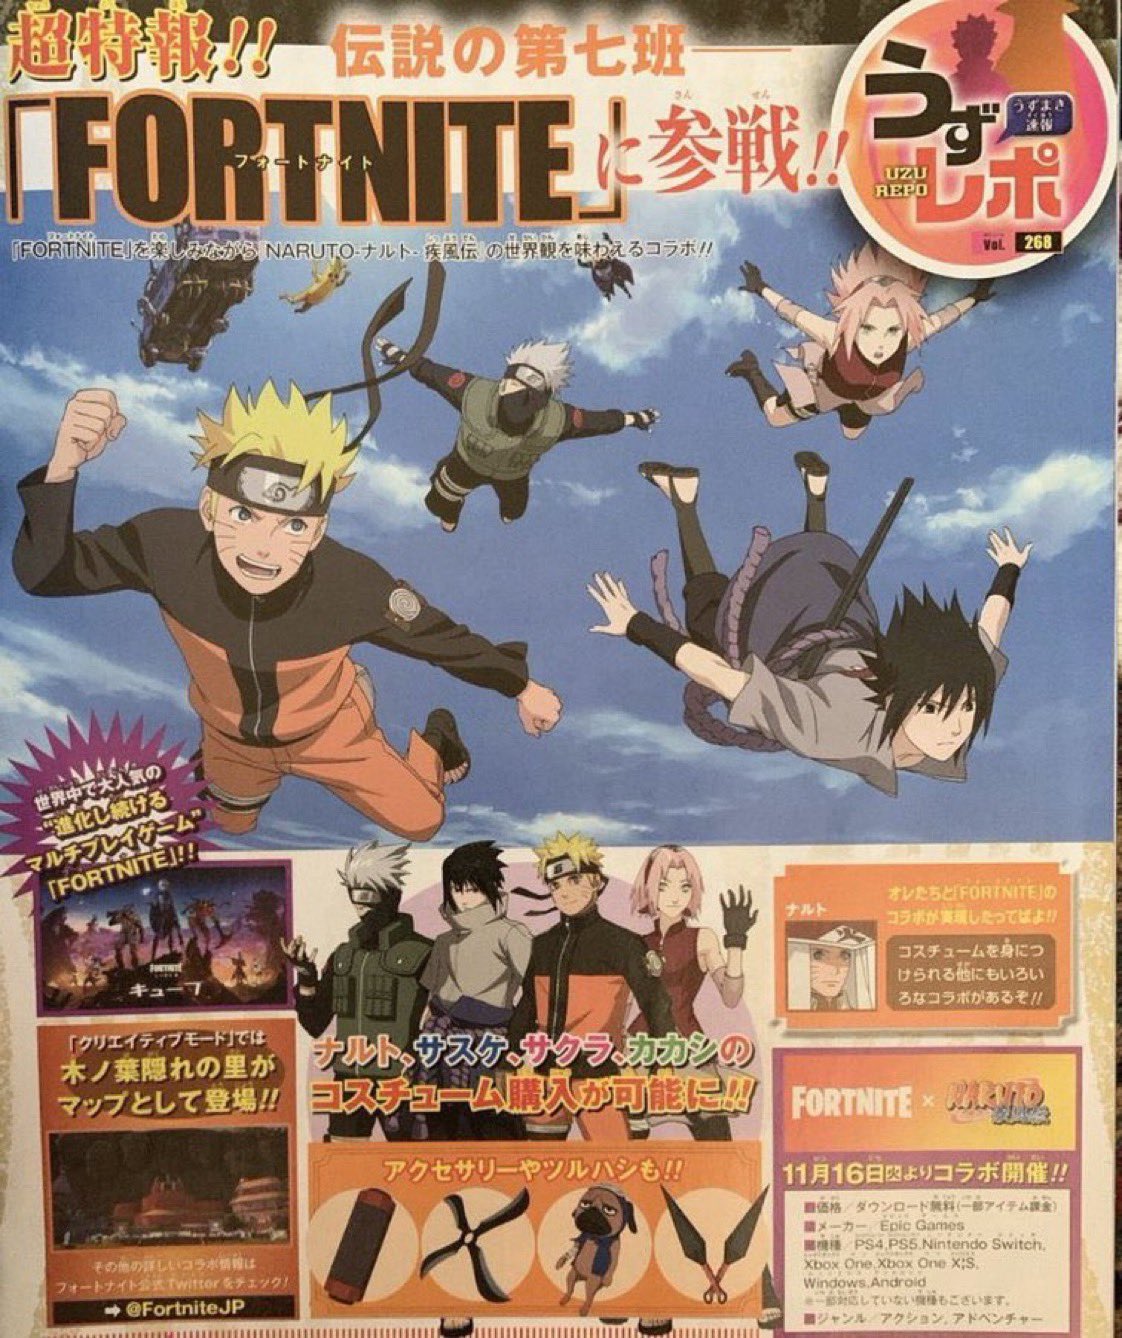 Naruto, Sasuke, Sakura and Kakashi skins from the manga Naruto are coming to Fortnite  